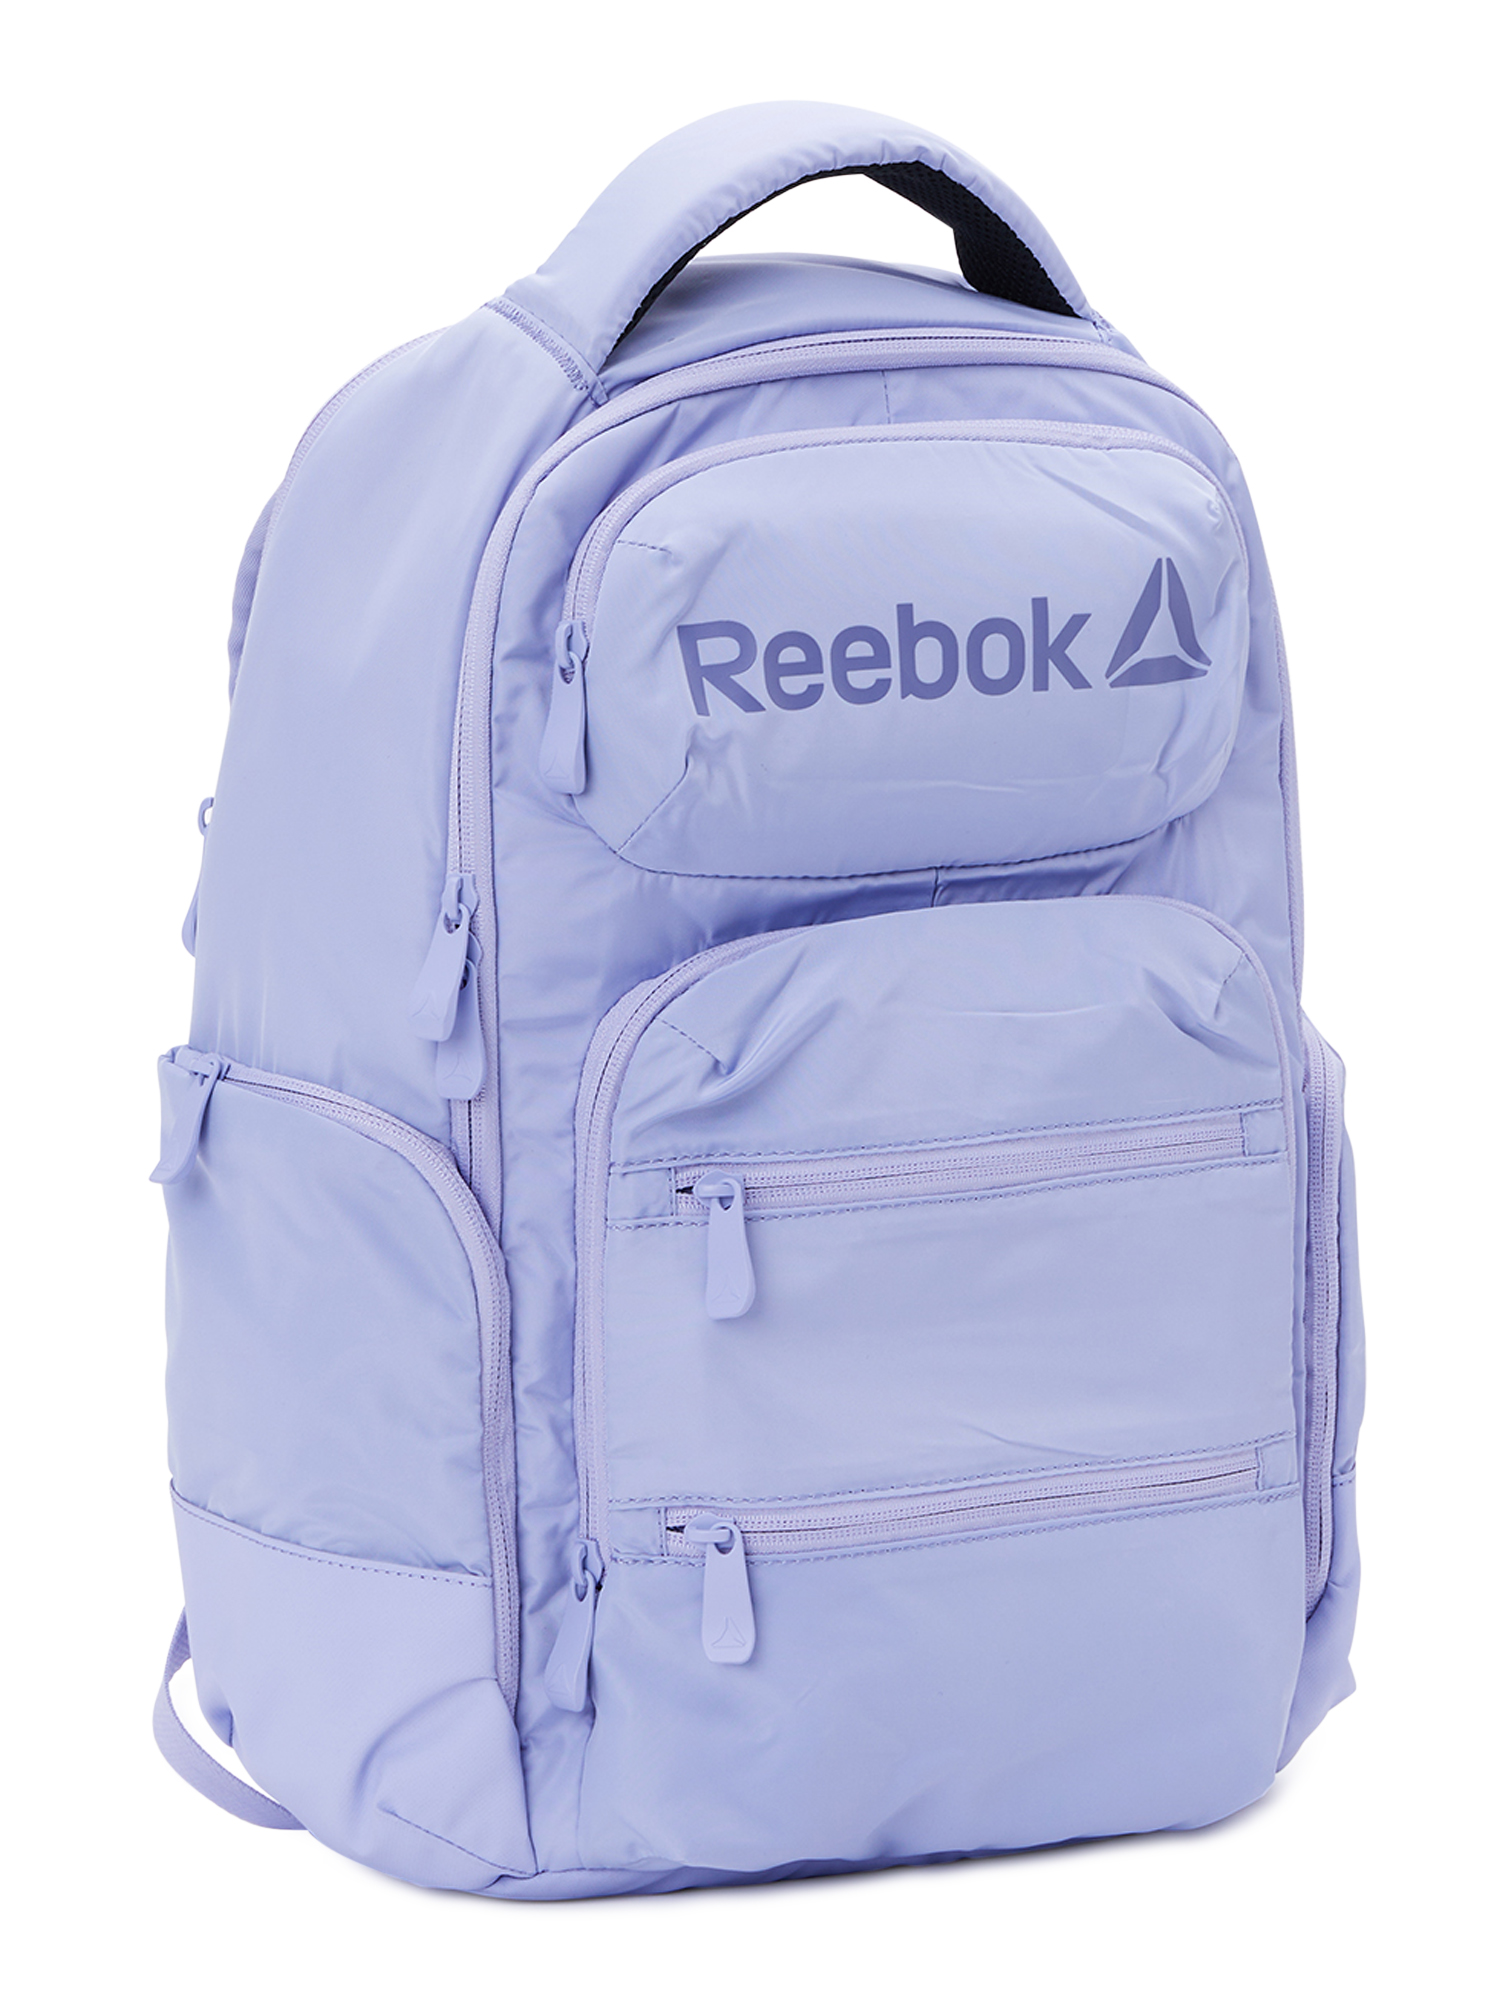 Reebok Unisex Adult Winter 16" Laptop Backpack, Sweet Lavender - image 4 of 5